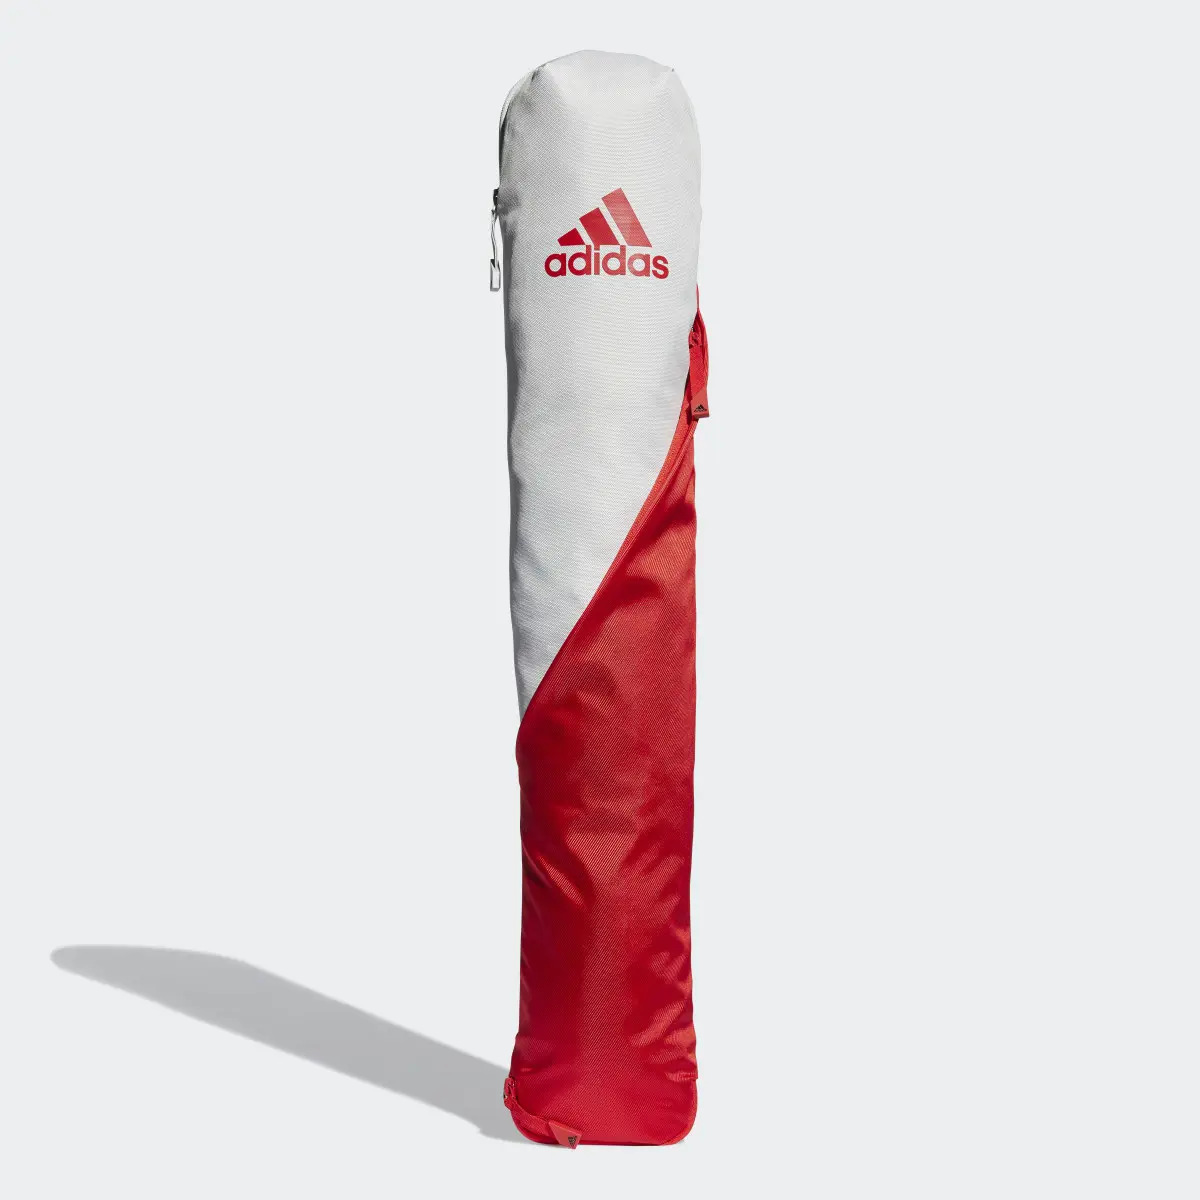 Adidas VS.6 Red/Grey Hockey Stick Sleeve. 1